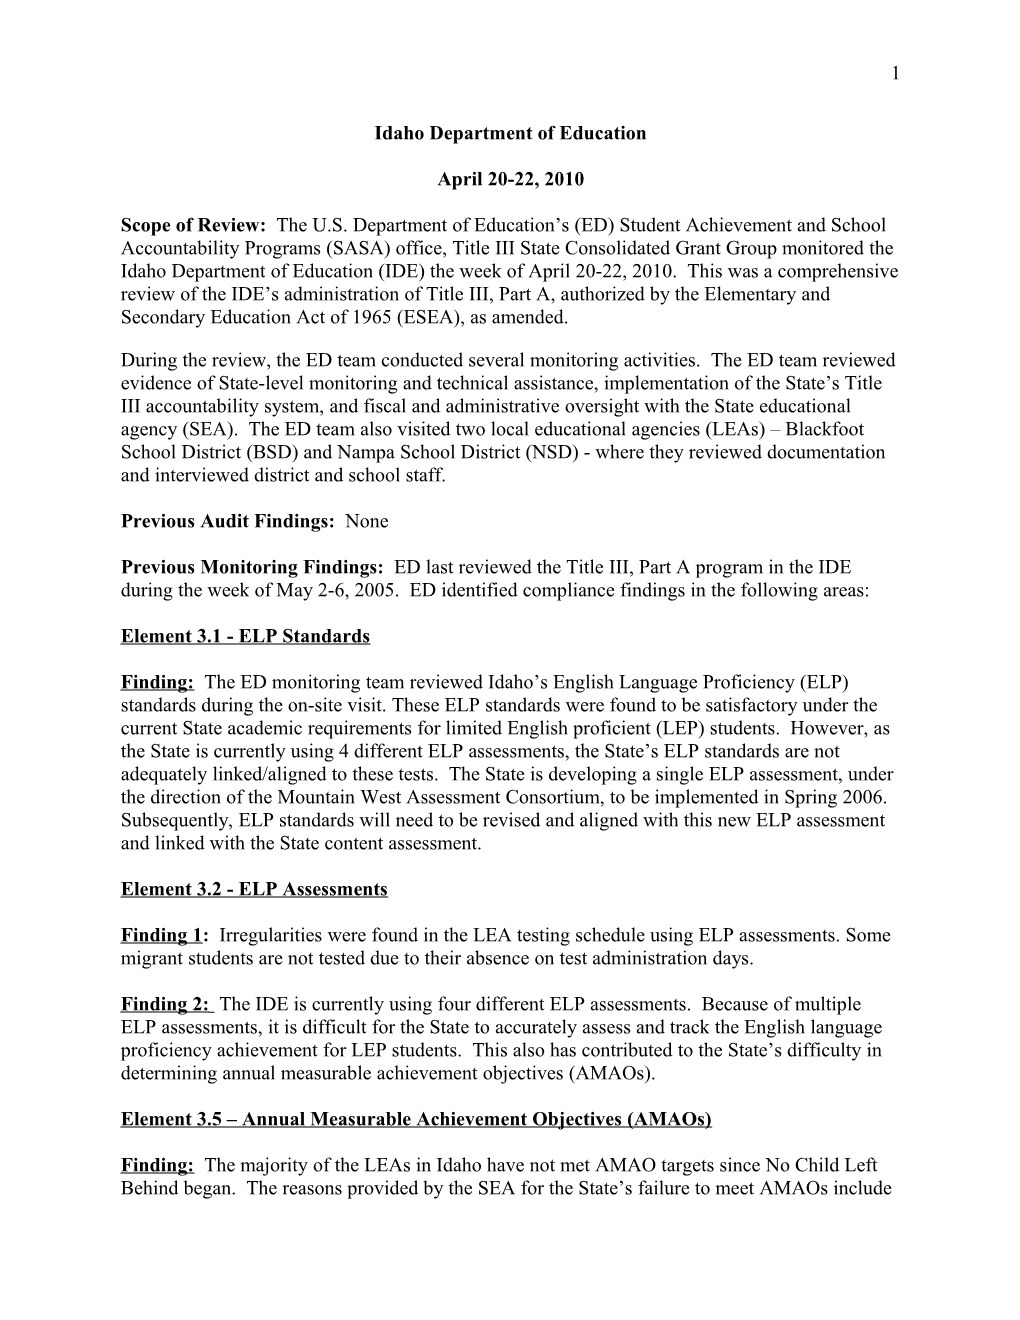 Idaho Title III Monitoring Rpt (April 2-22, 2010) WORD